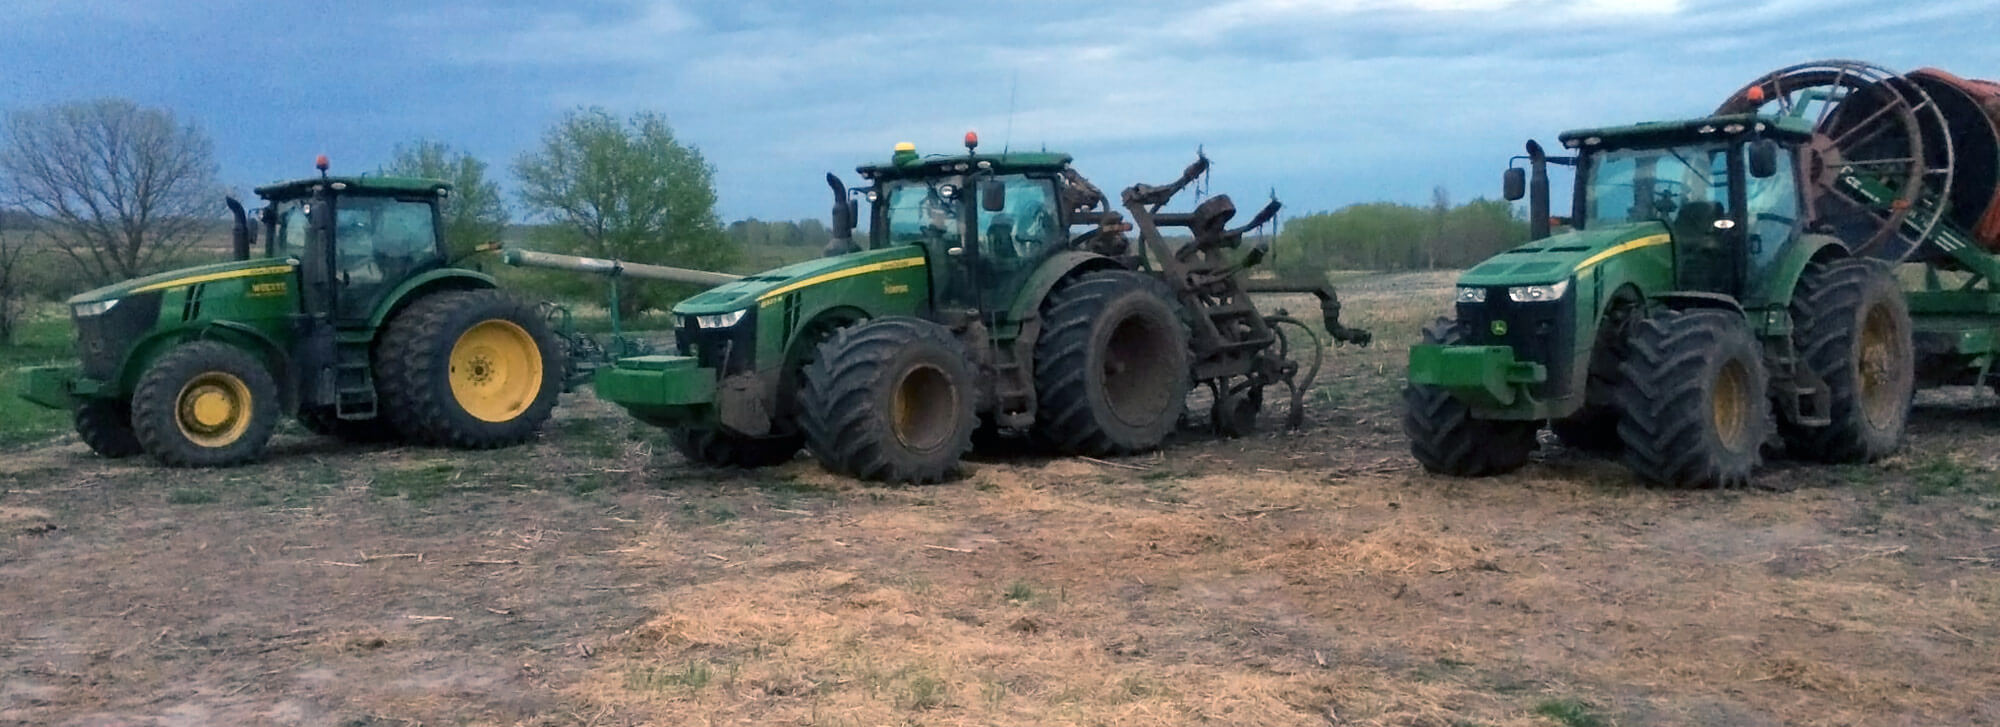 Group of John Deere tractors prepared for manure pumping via drag hose application